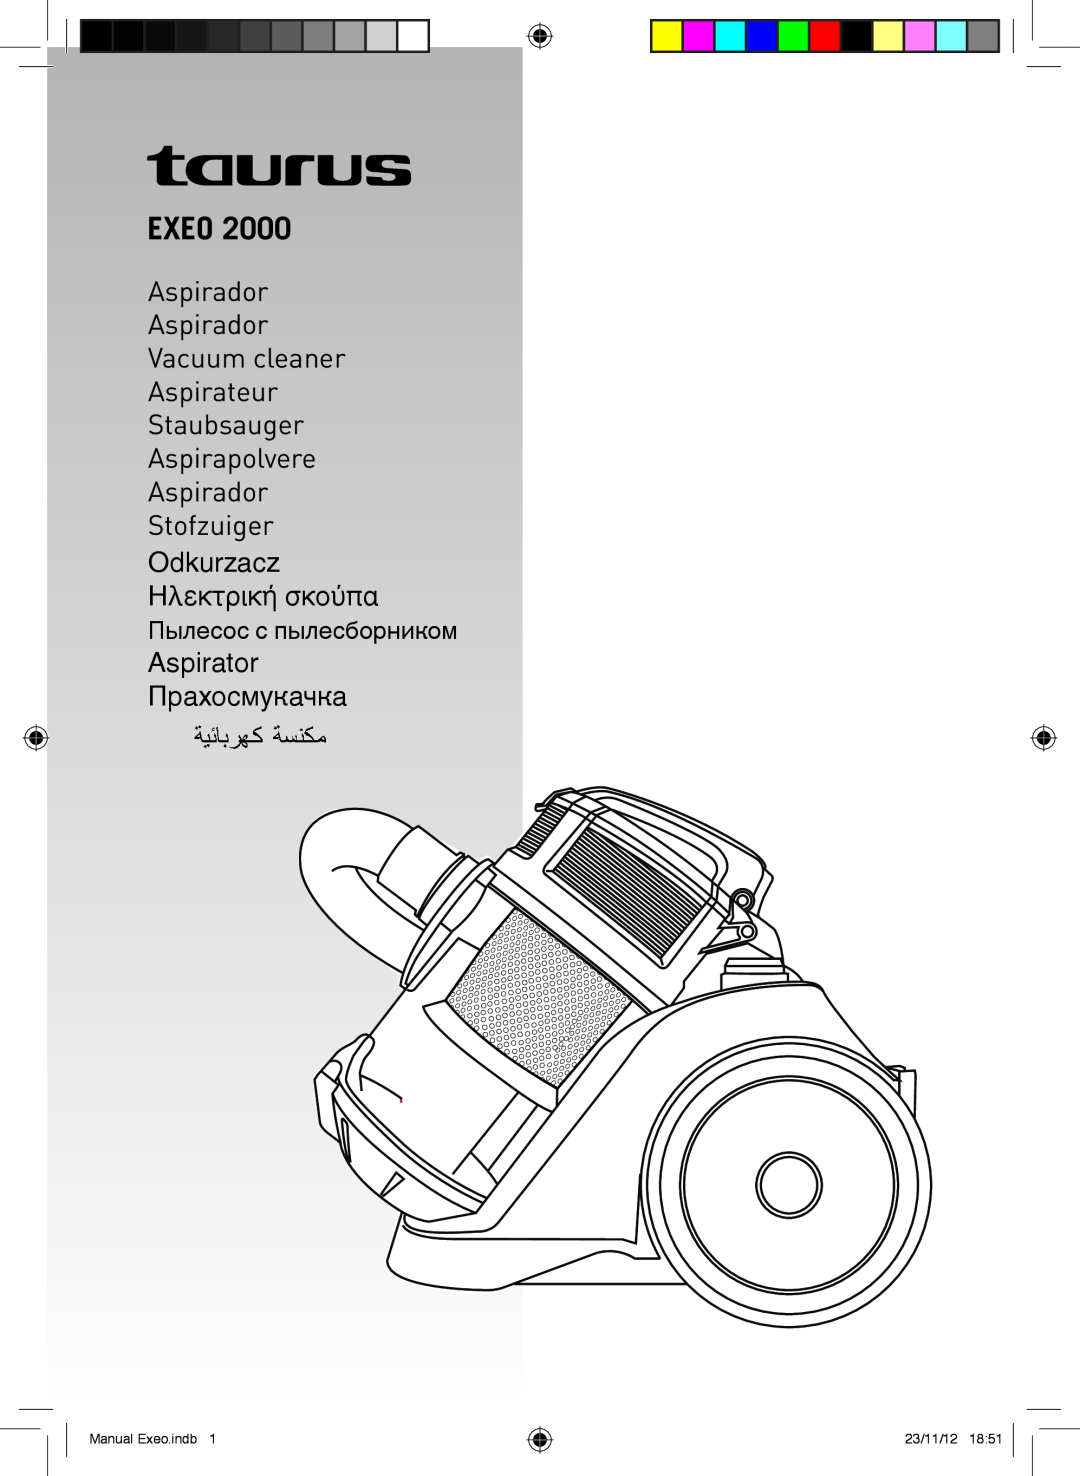 Taurus Group EXEO 2000 manual Exeo, Aspirador Aspirador Vacuum cleaner Aspirateur, Odkurzacz Ηλεκτρική σκούπα, 23/11/12 